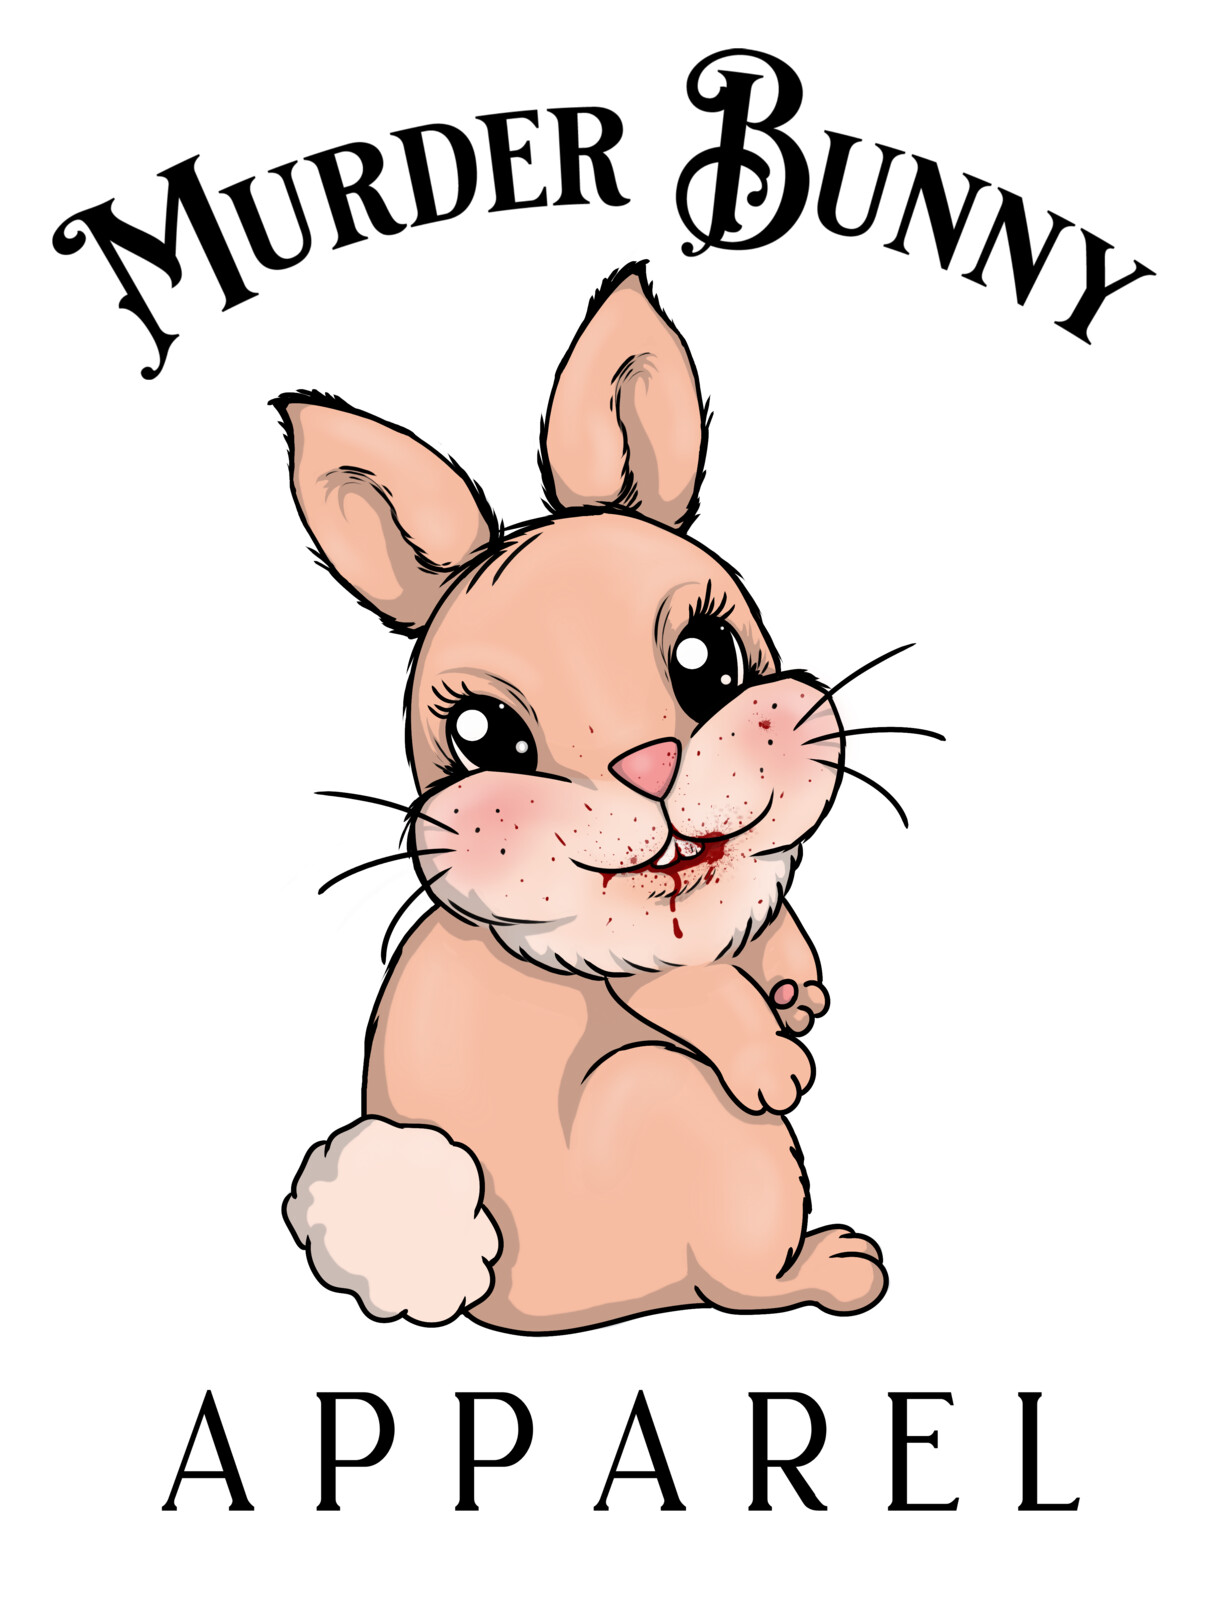 Murder Bunny Apparel logo 